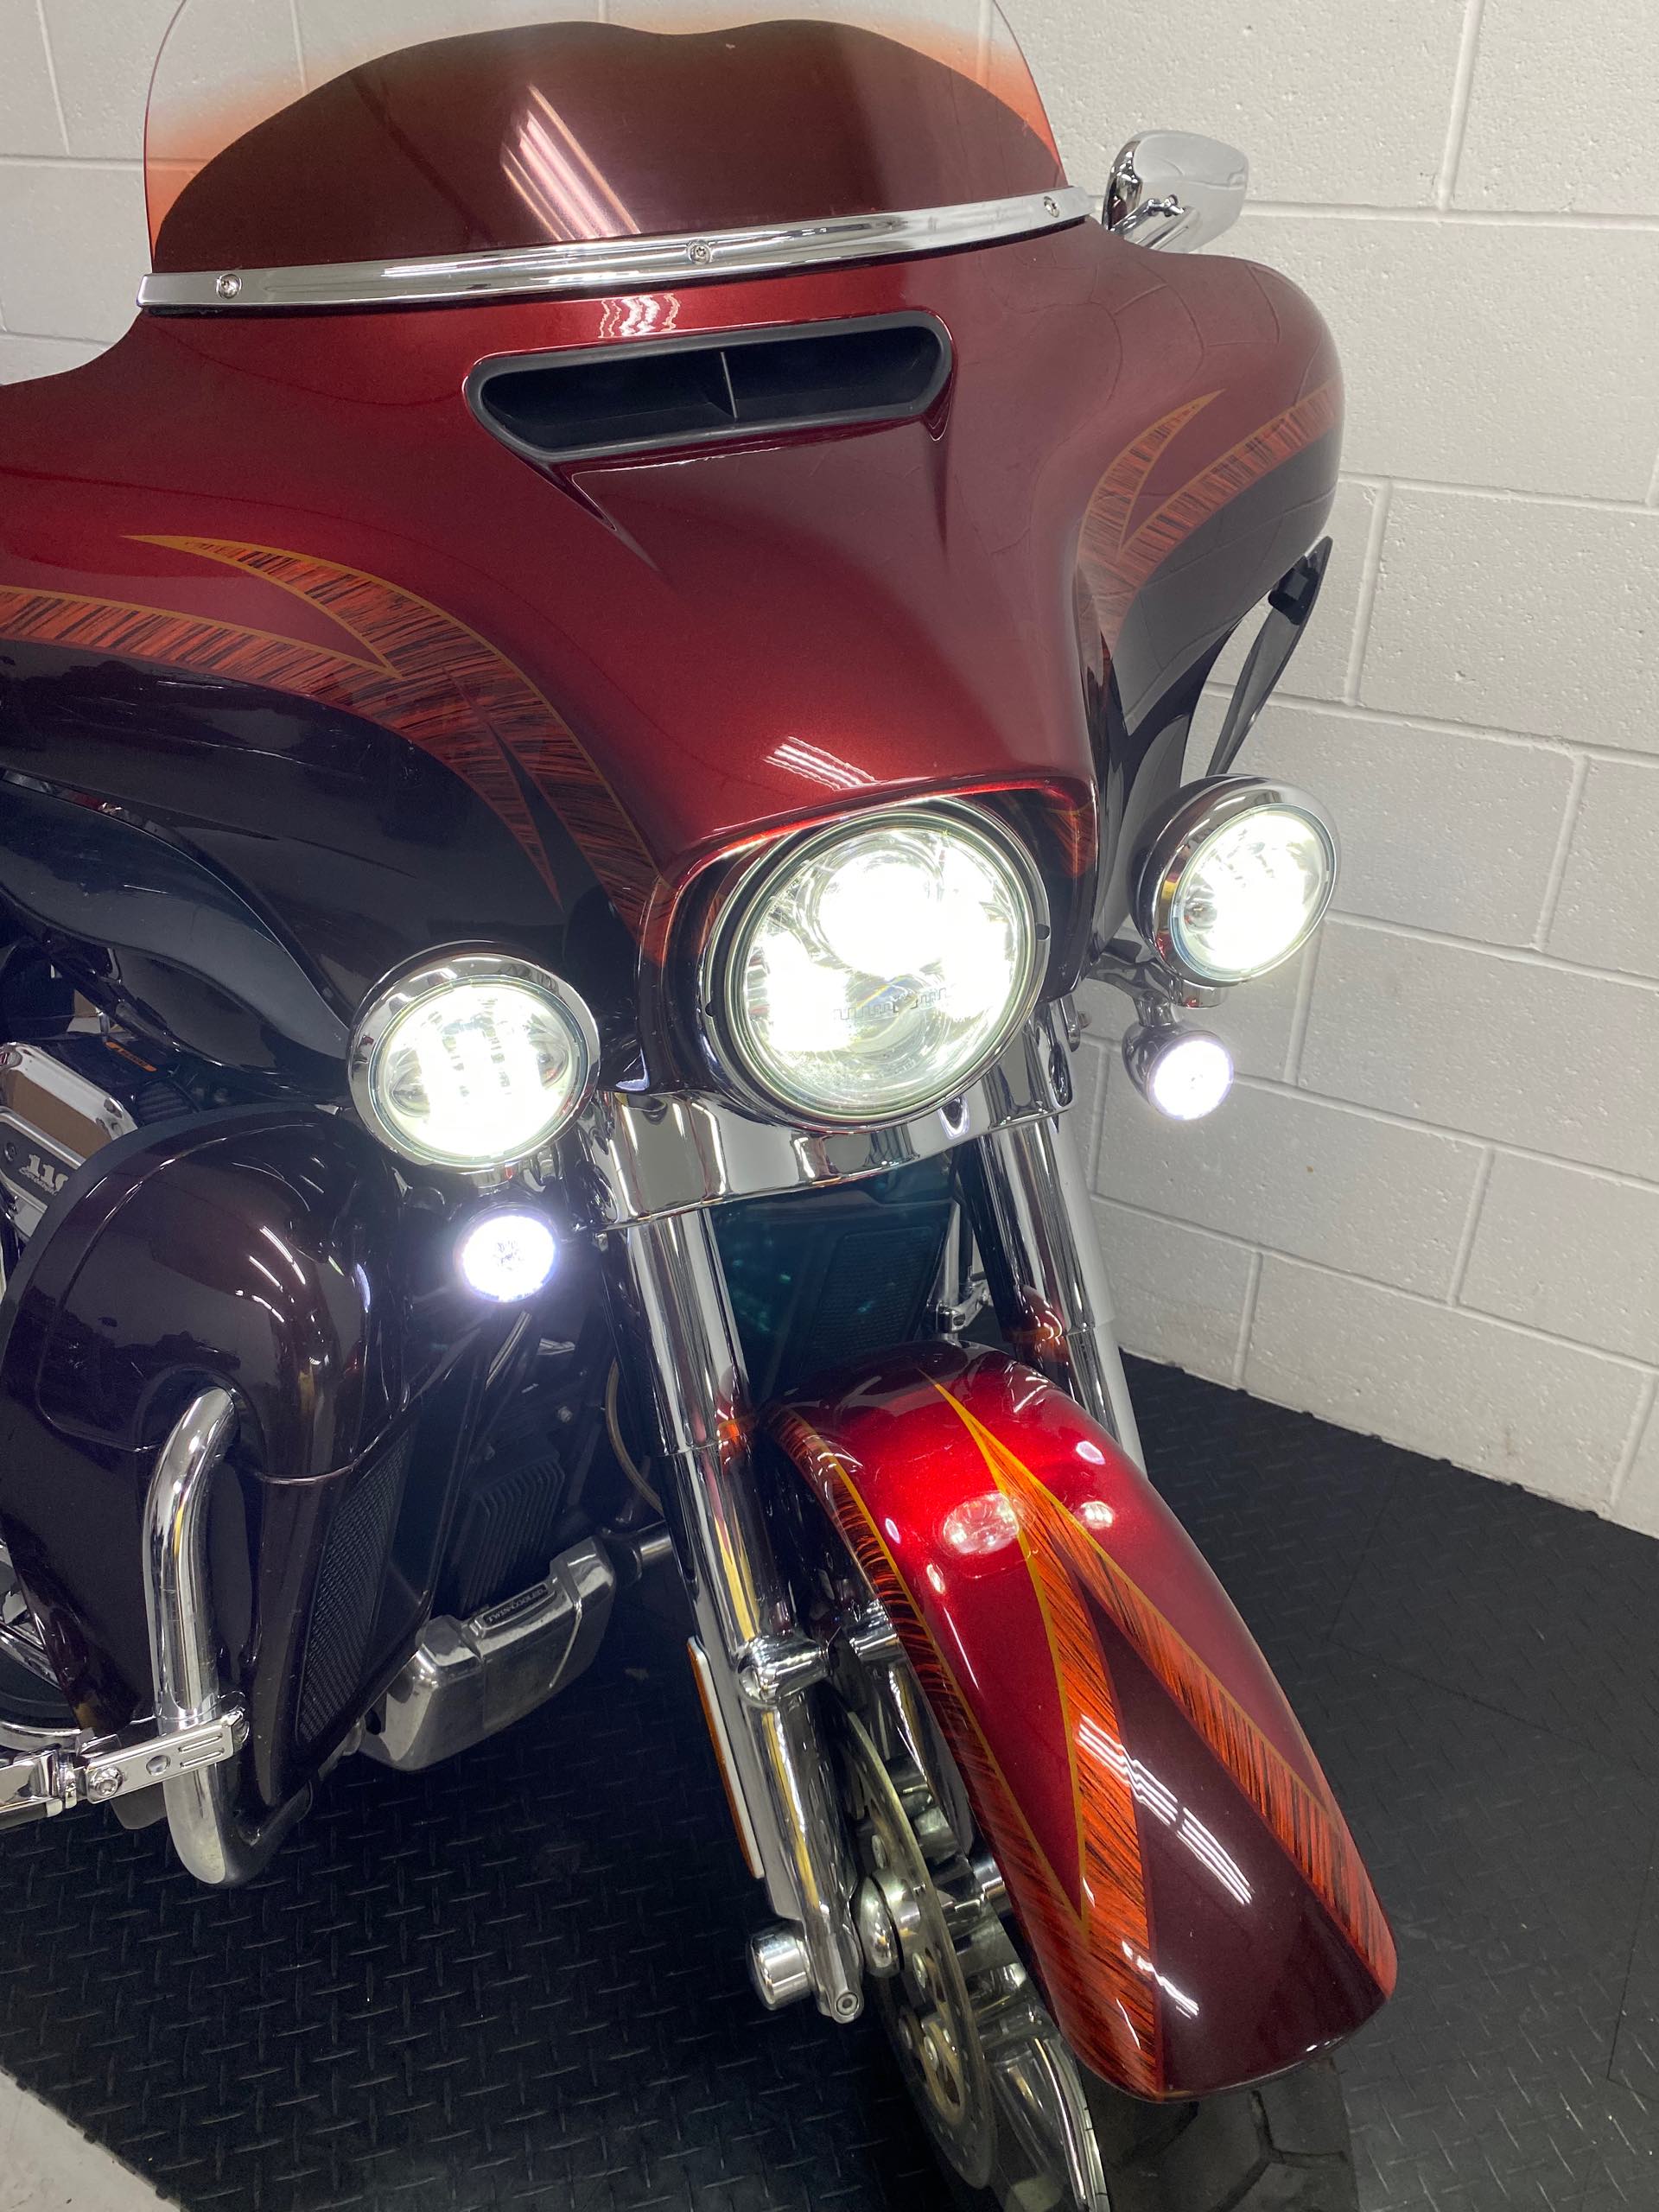 2014 Harley-Davidson Electra Glide CVO Limited at Destination Harley-Davidson®, Silverdale, WA 98383